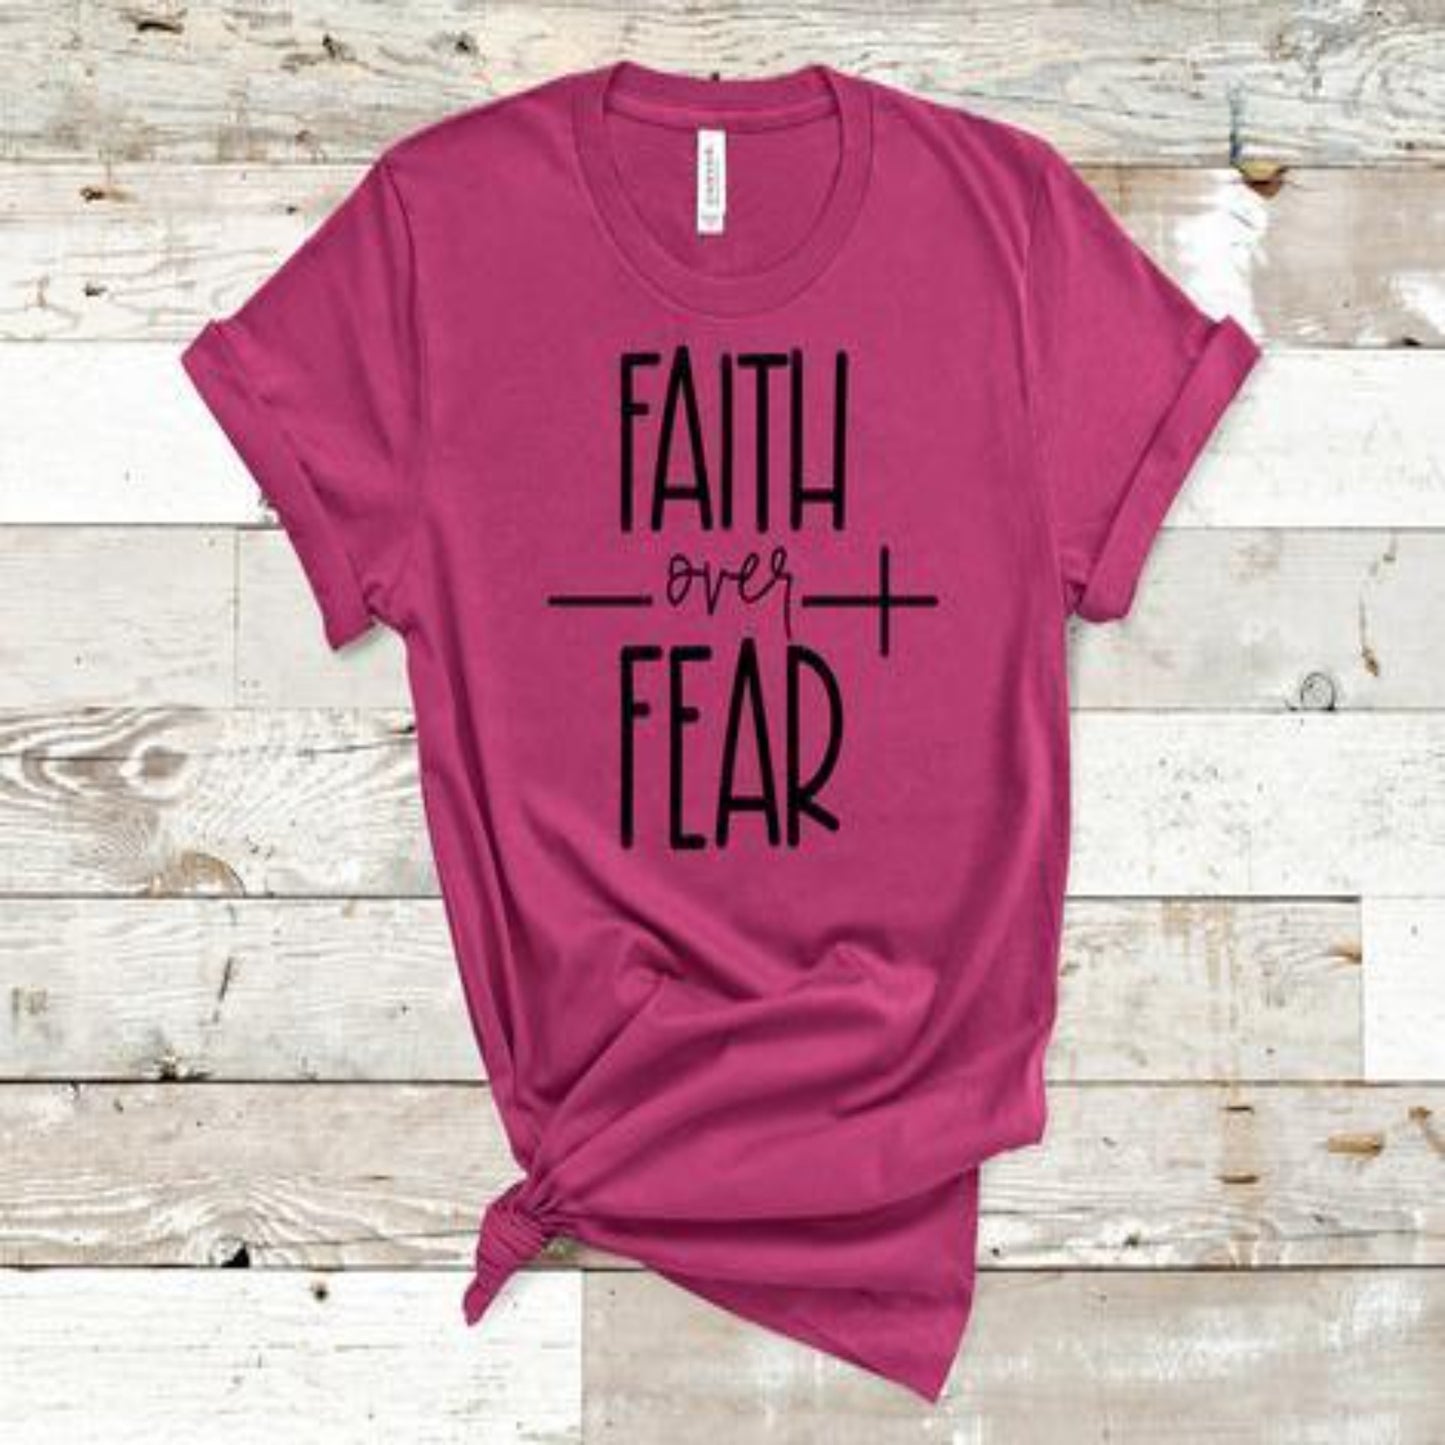 faith_over_fear specialty tee casual shirt everyday wear  comfortable tshirt